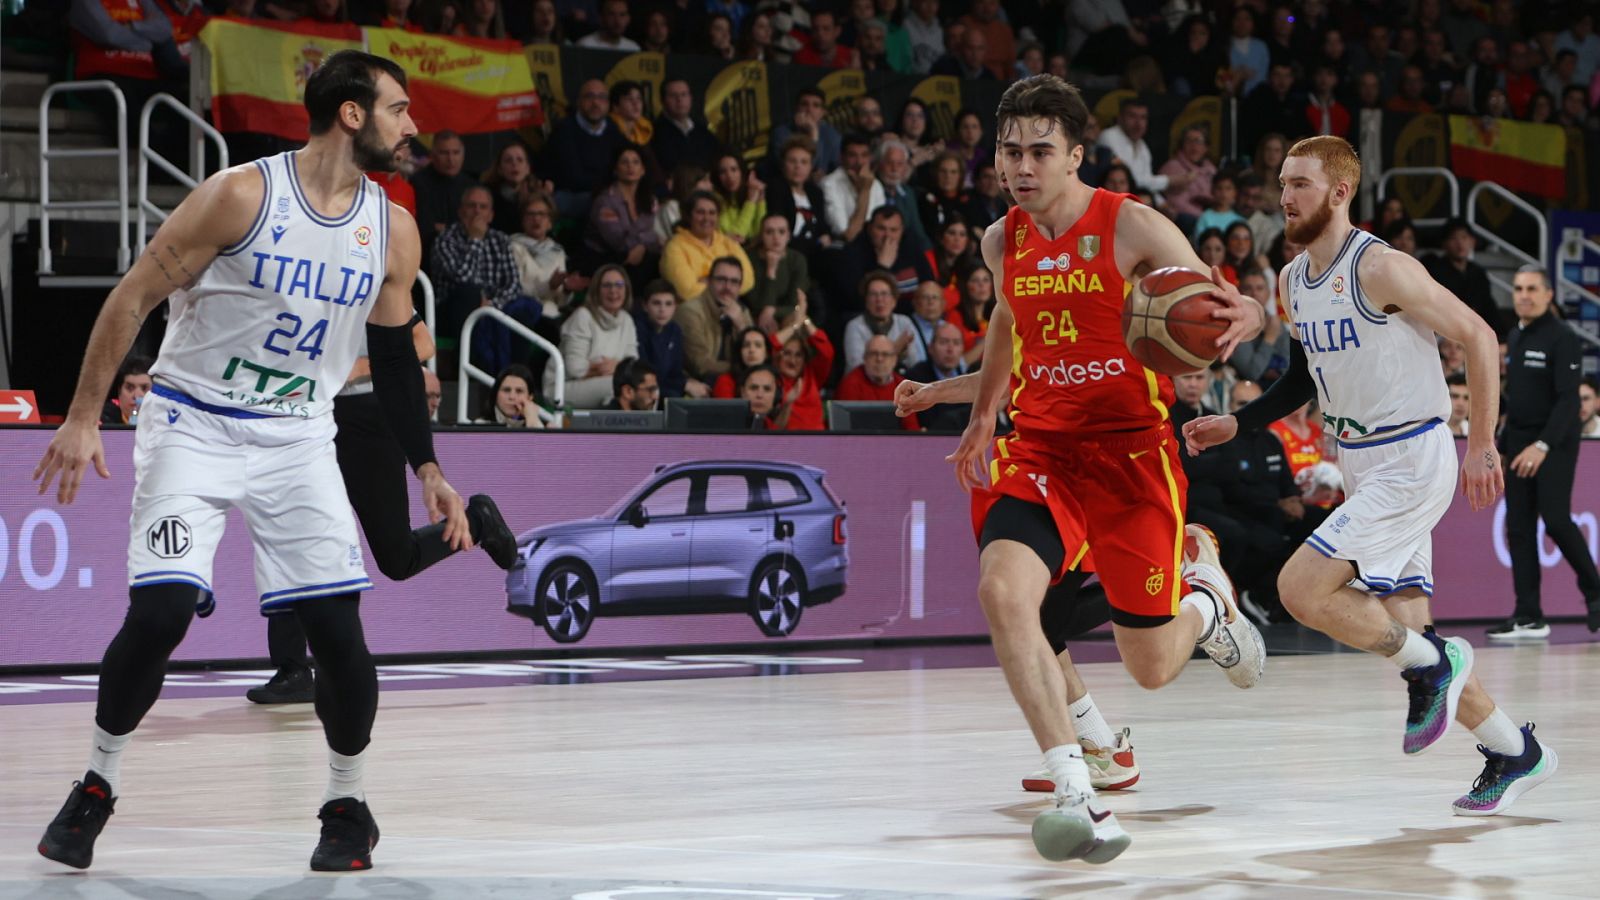 Baloncesto - Clasificación Campeonato del Mundo masculino. 12ª jornada: España - Italia - RTVE Play